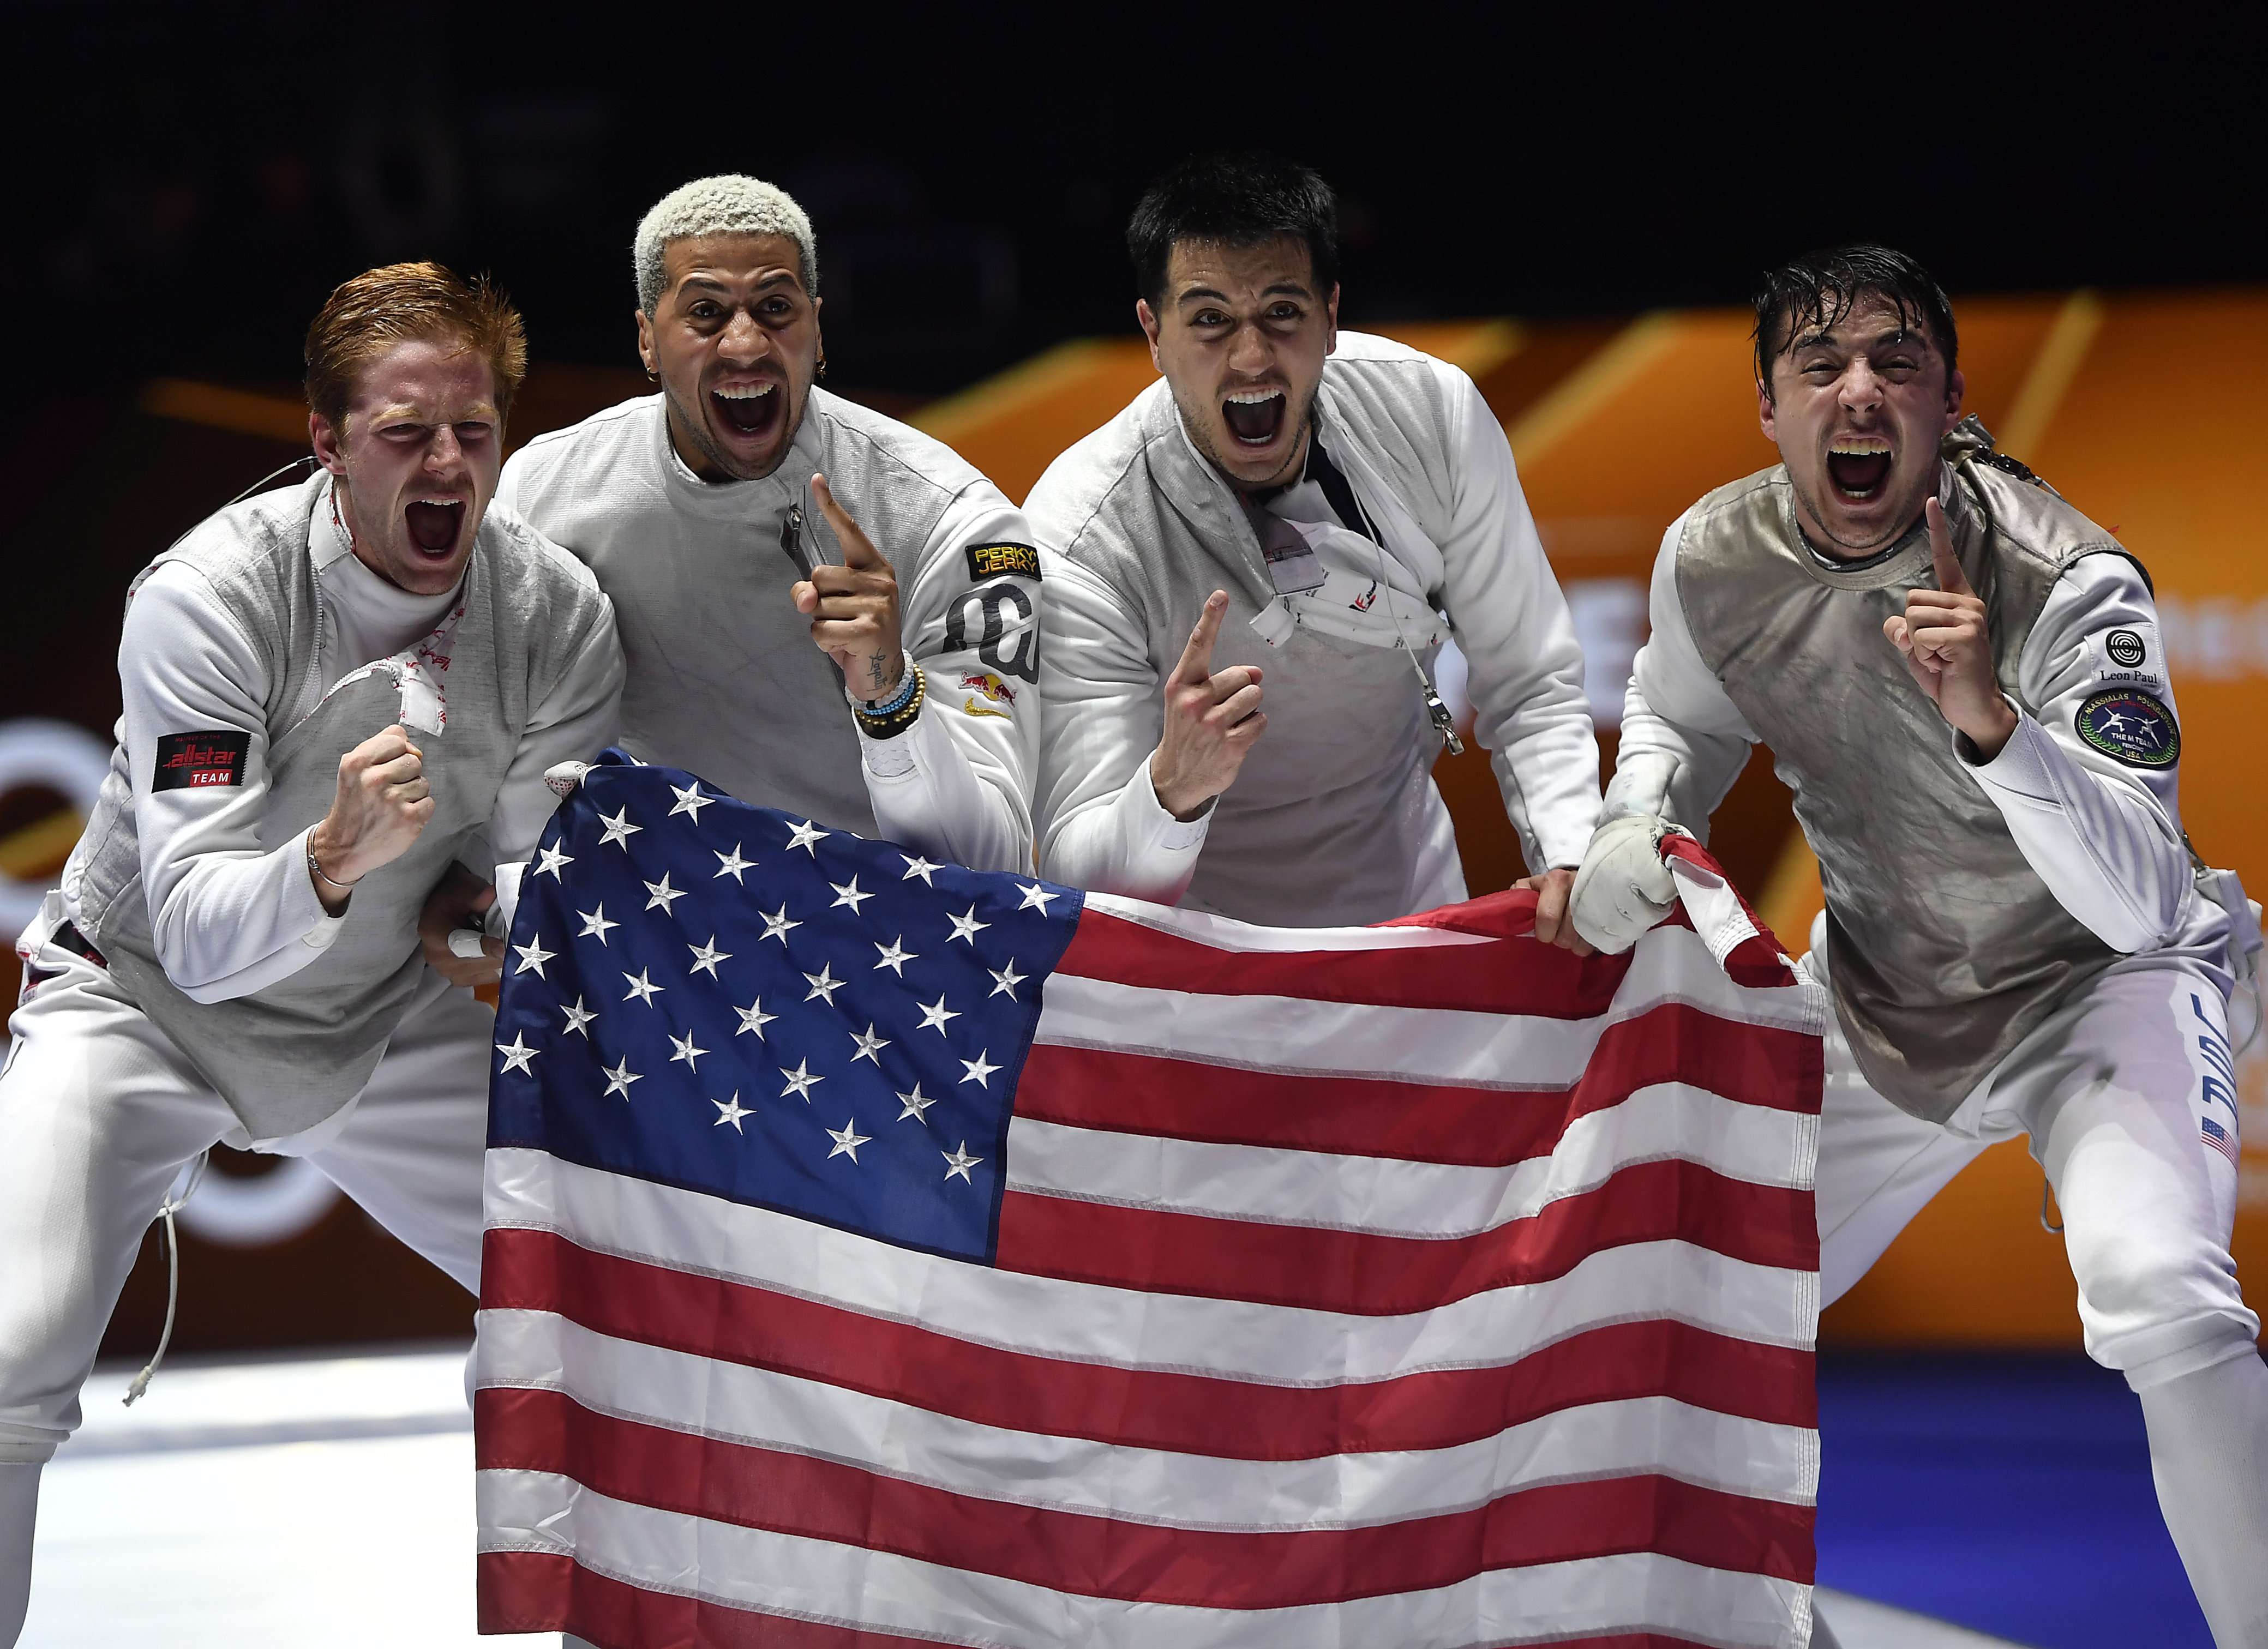 Fencing - Men's foil team - United States wins gold - Photos